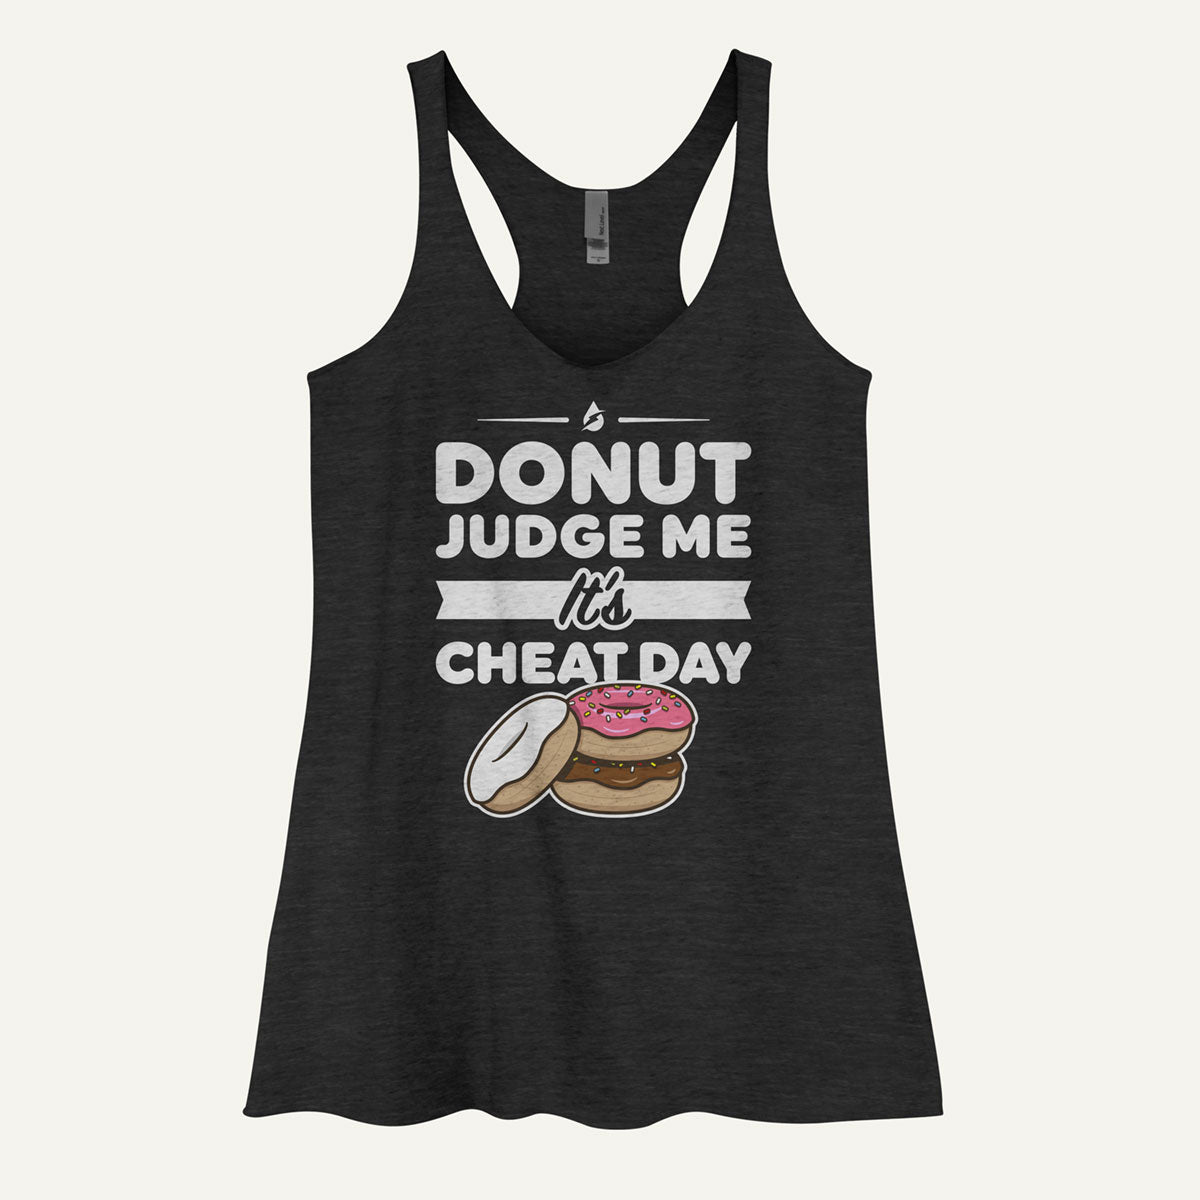 Donut Judge Me It's Cheat Day Women's Tank Top